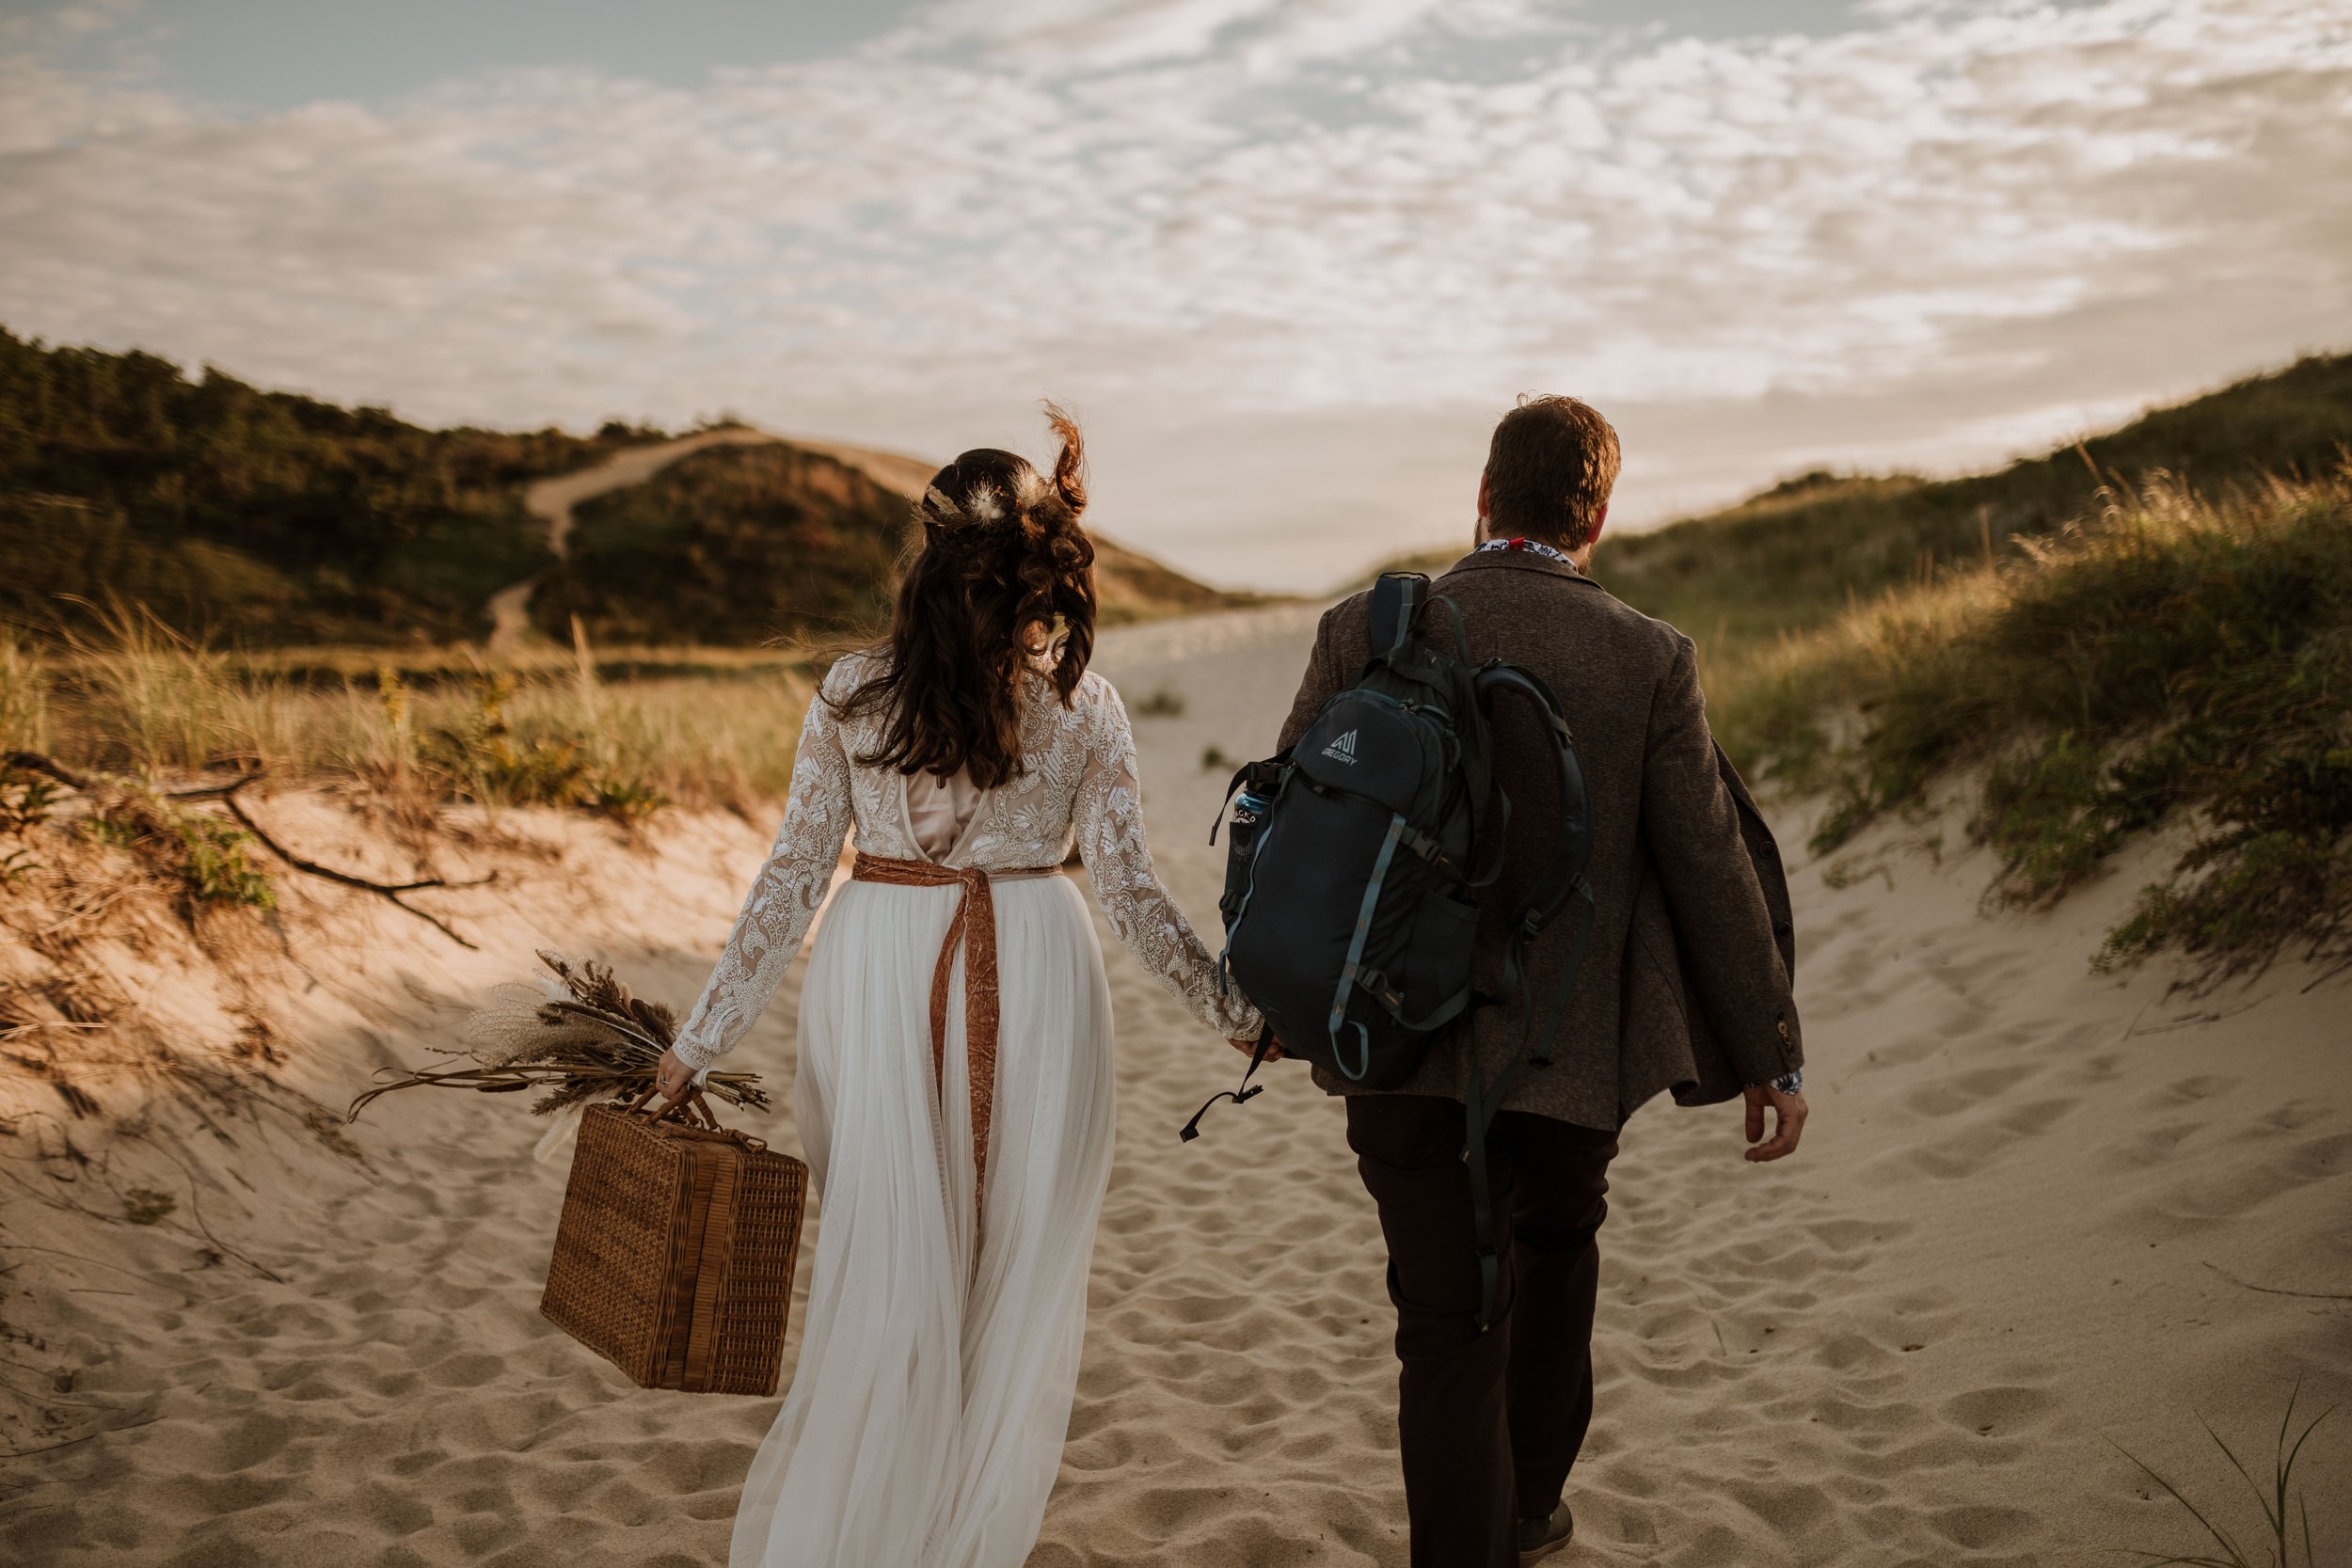 Couple walking toward the ocean along a sandy path in the dunes.